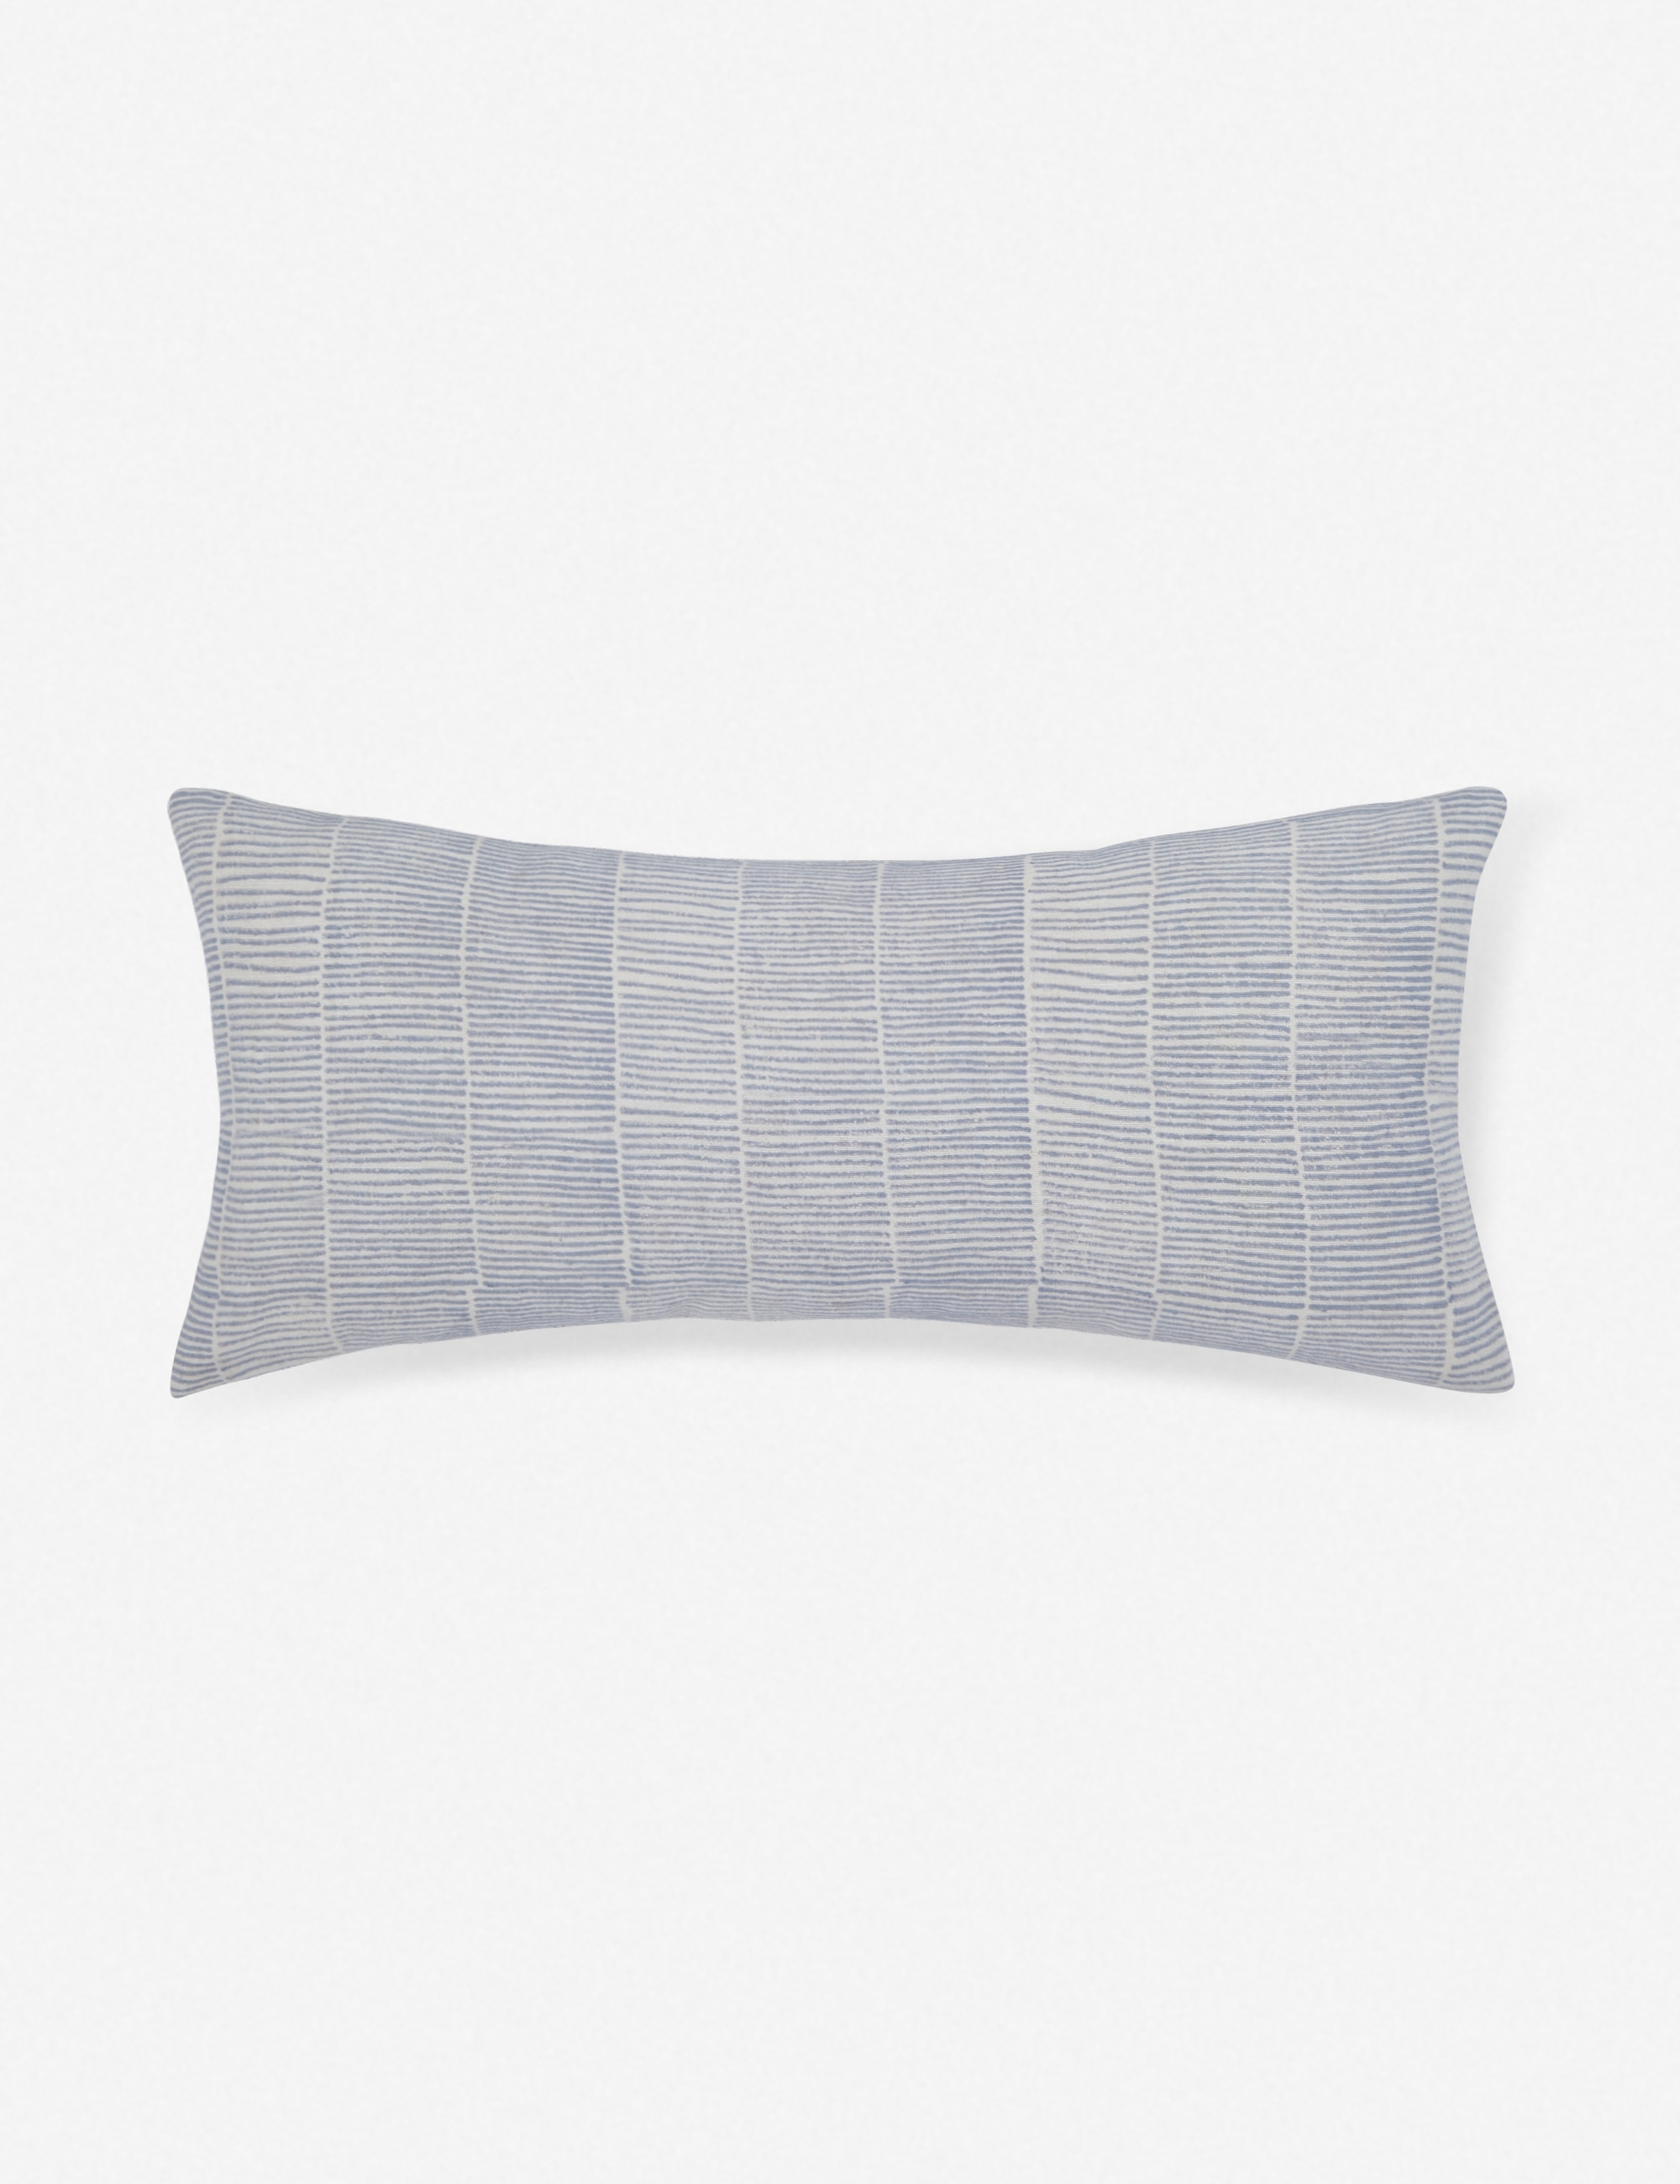 Claudette Long Lumbar Pillow, Ice Blue - Lulu and Georgia